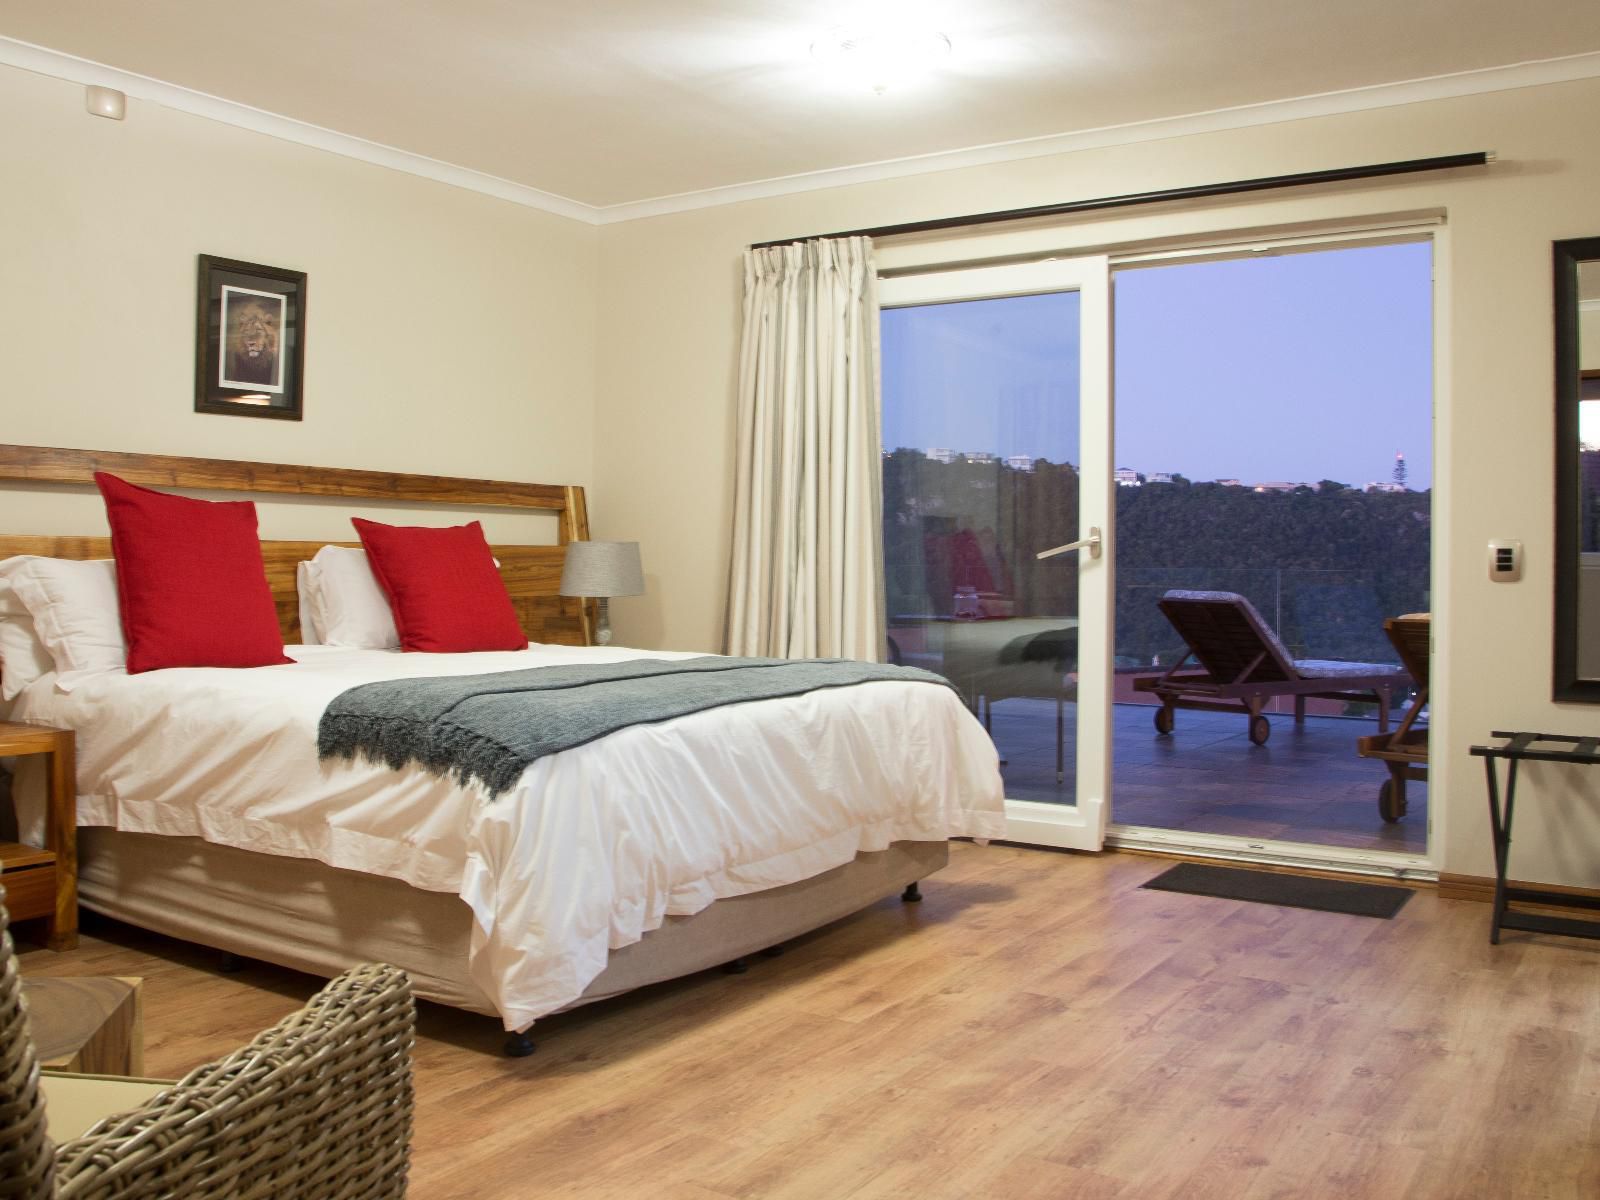 Lala Panzi Bandb Piesang Valley Plettenberg Bay Western Cape South Africa Bedroom